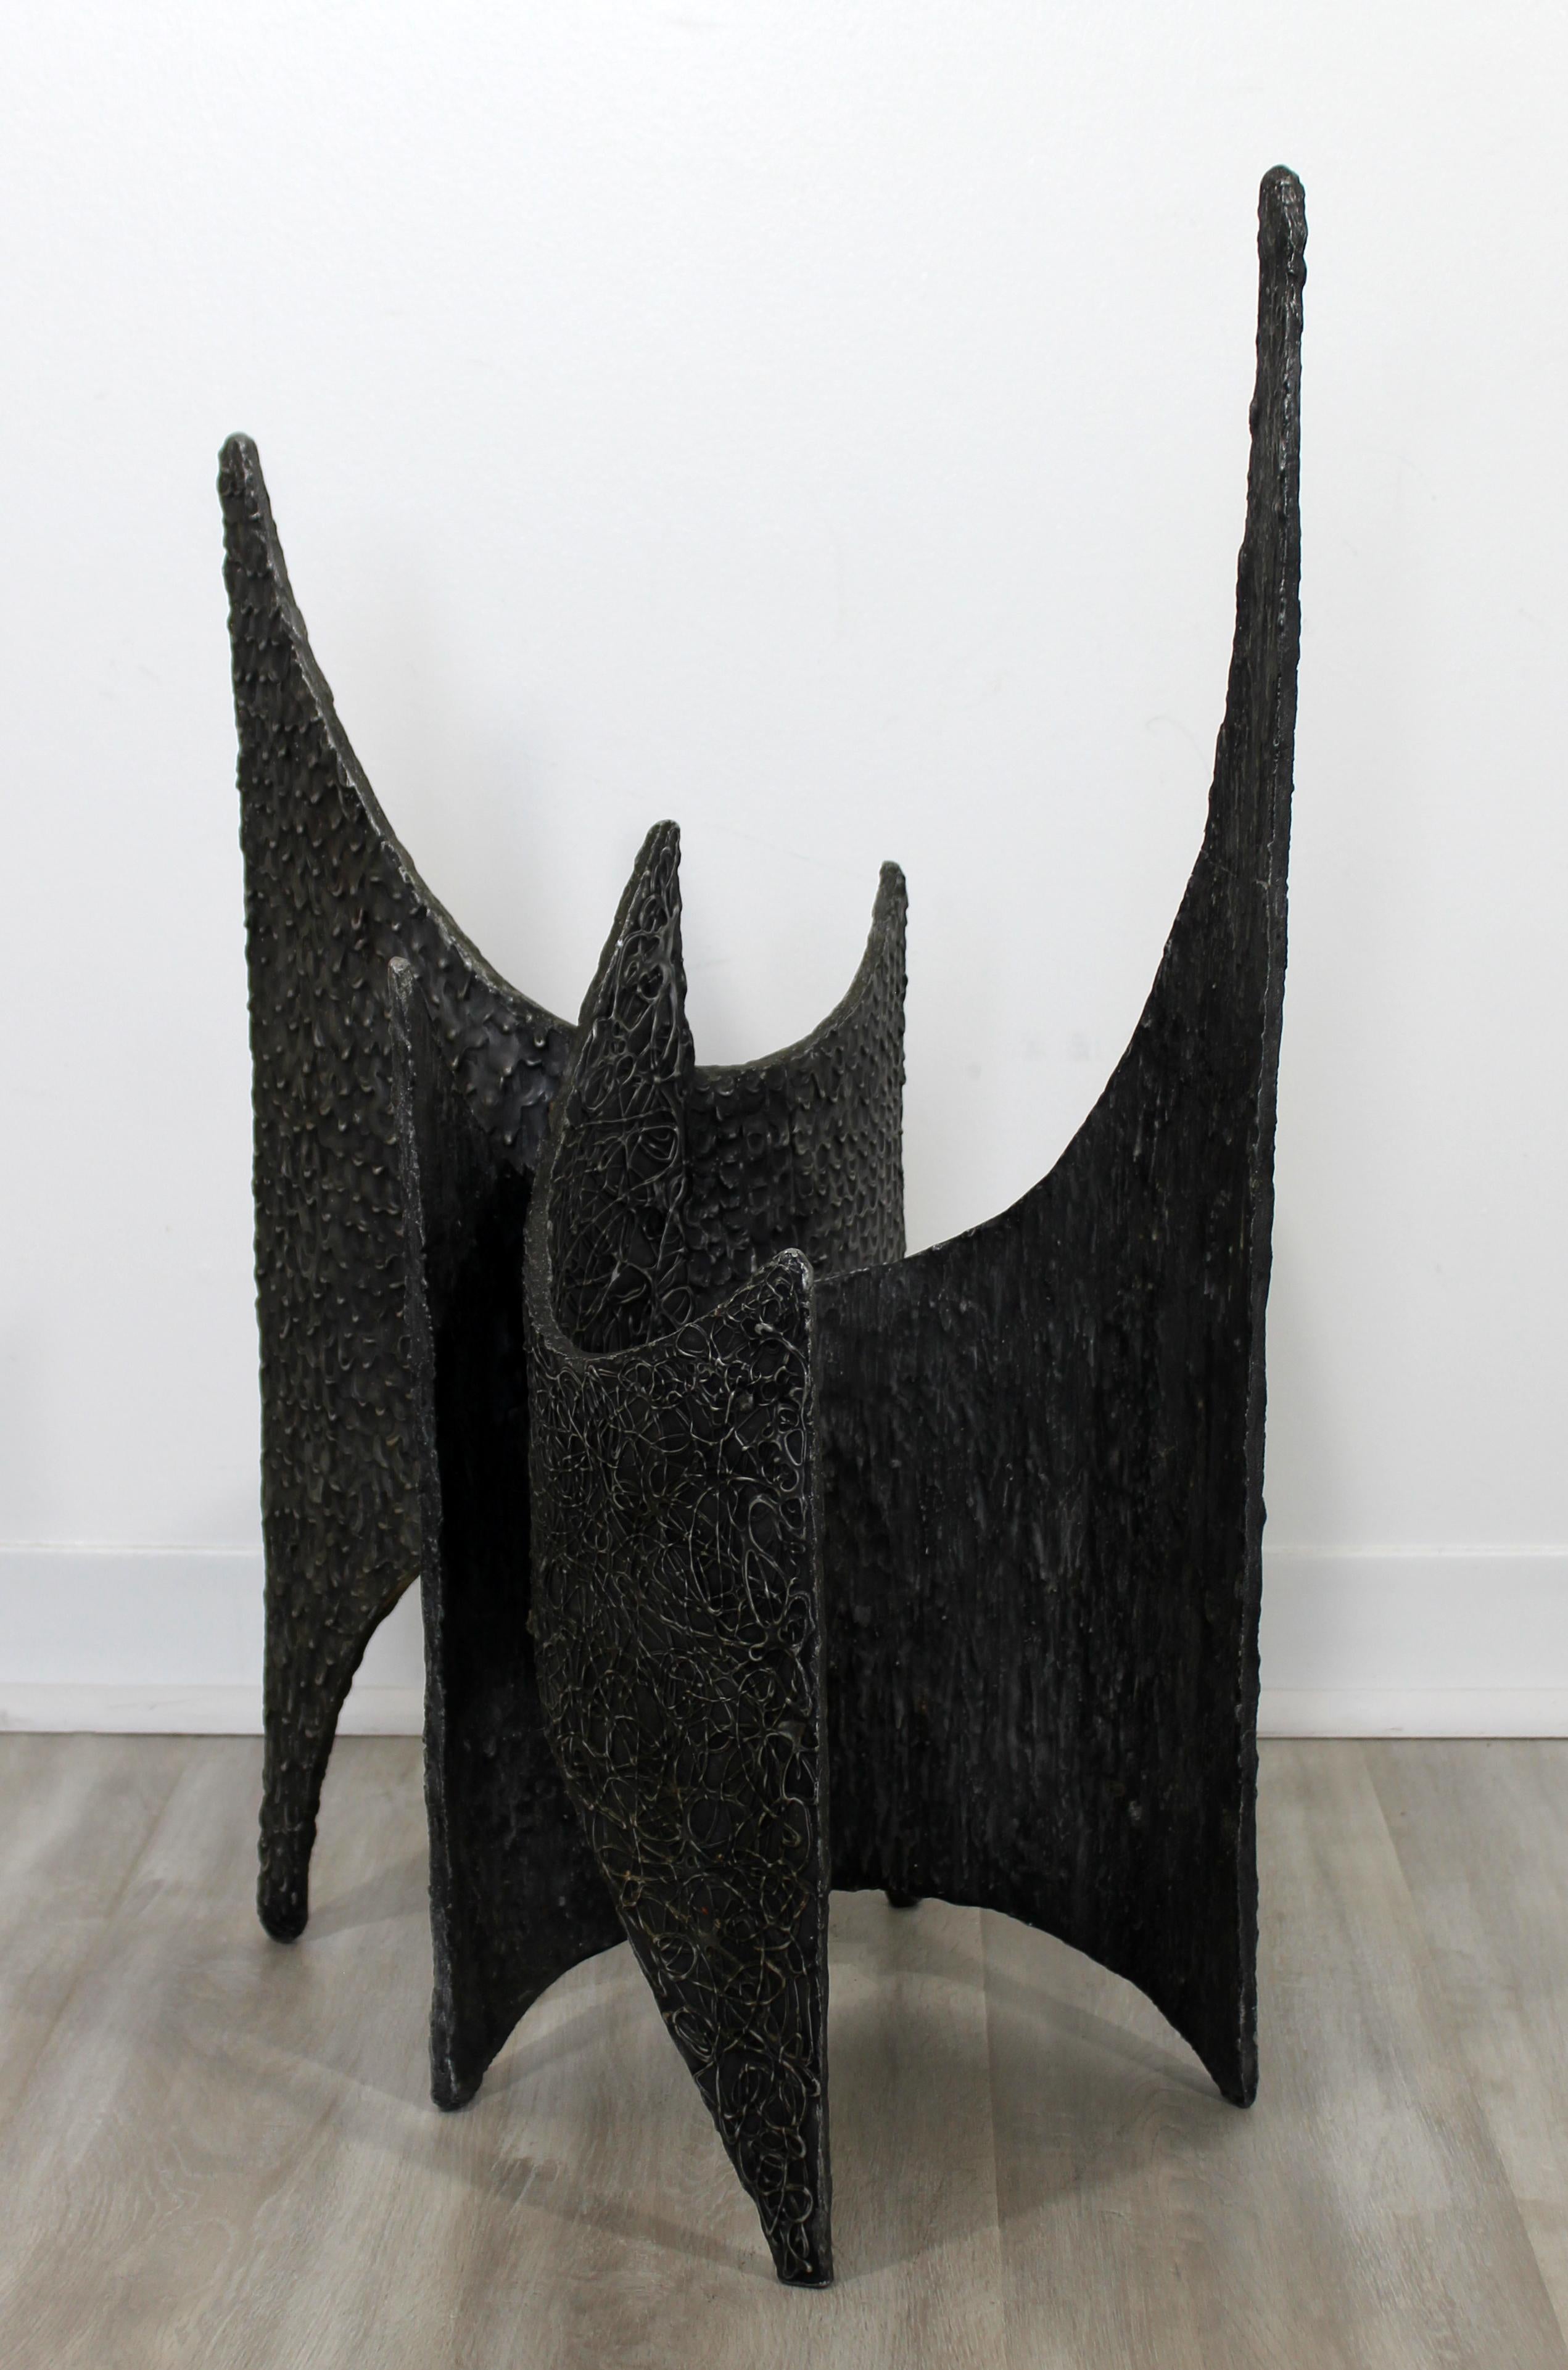 North American Mid-Century Modern Brutalist Abstract Resin Metal Sculpture Evans Pearsall Era